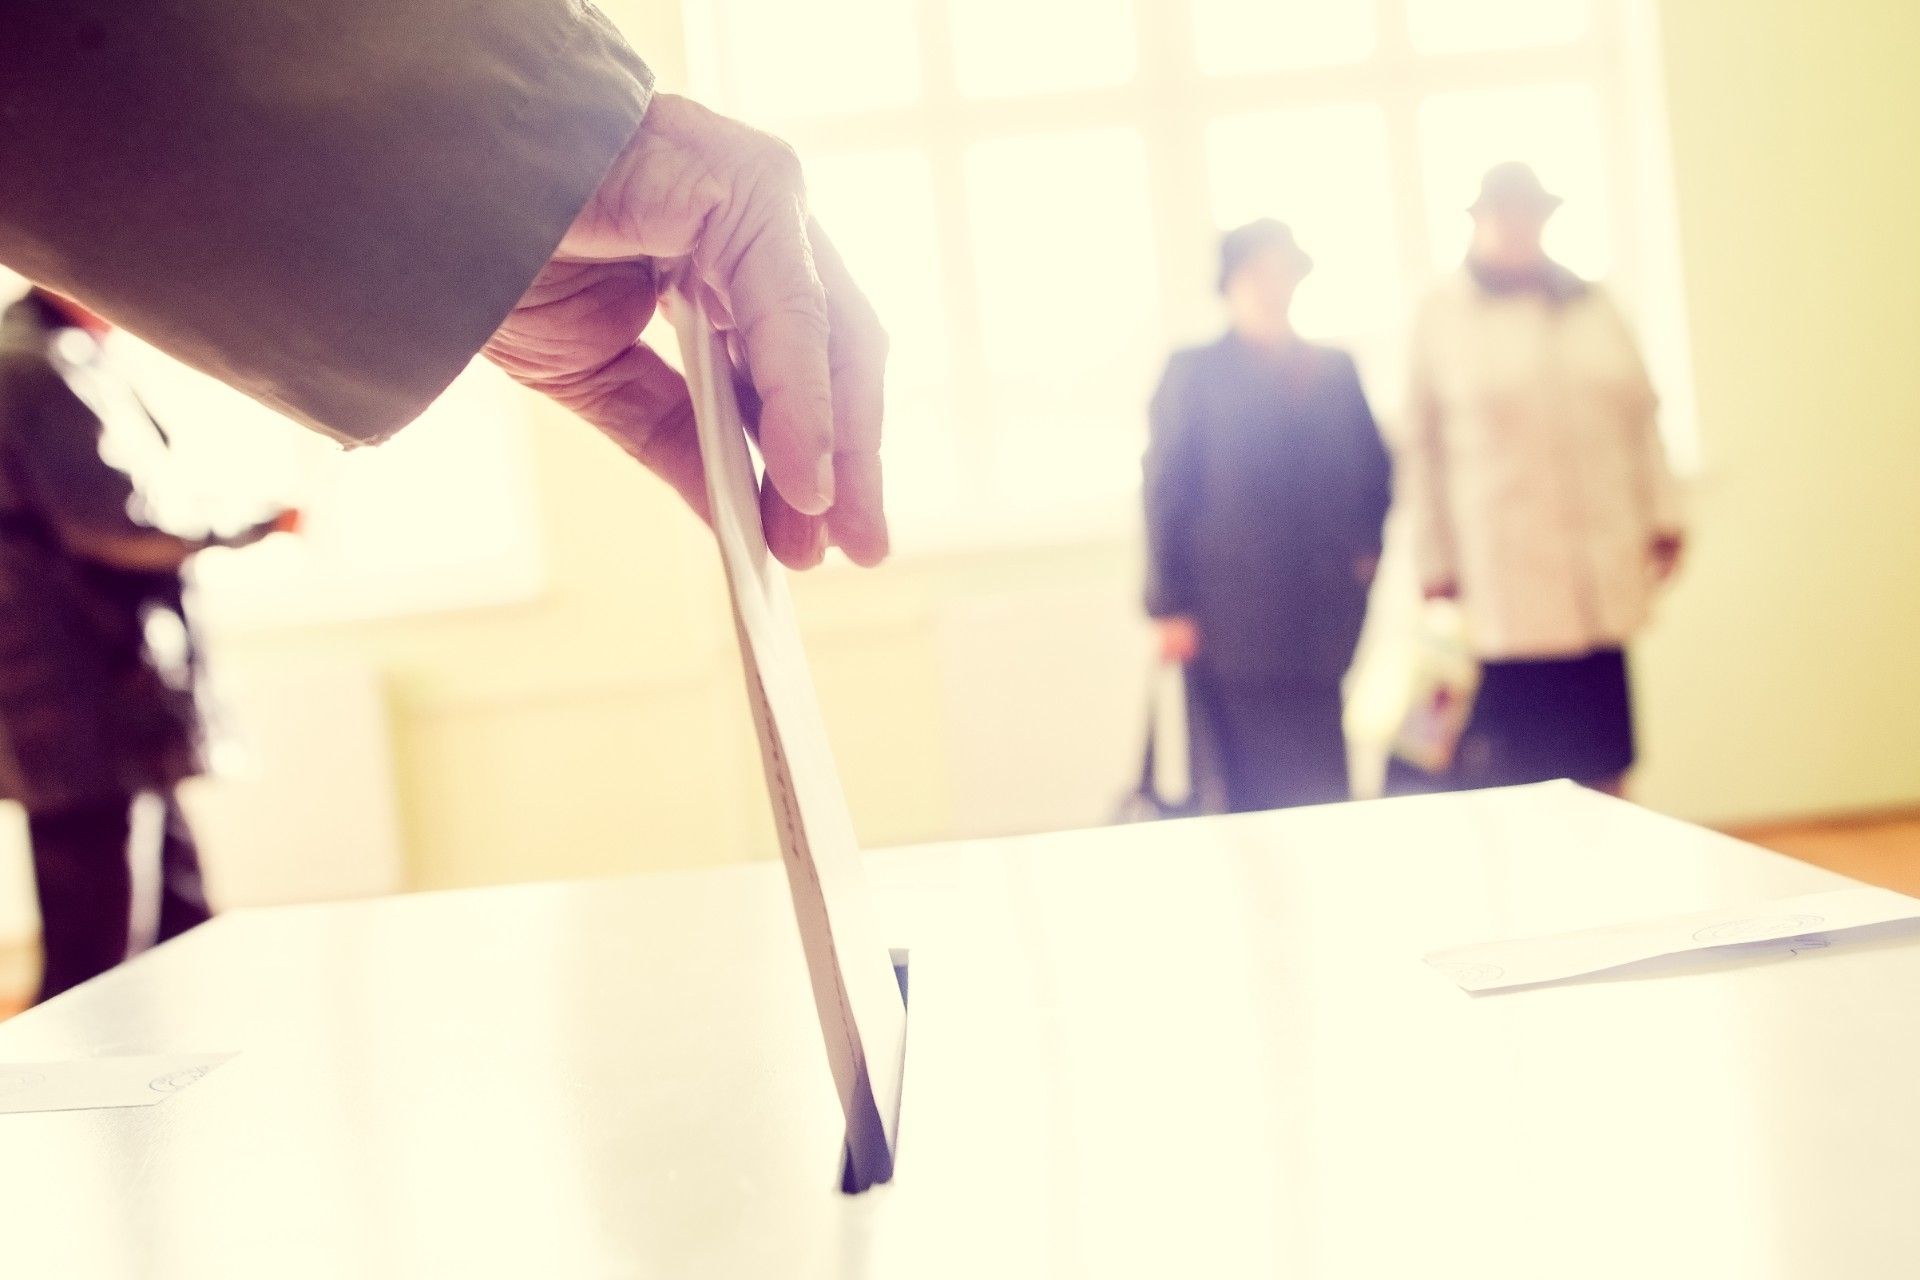 Man's hand puts ballot into ballot box - voting rights